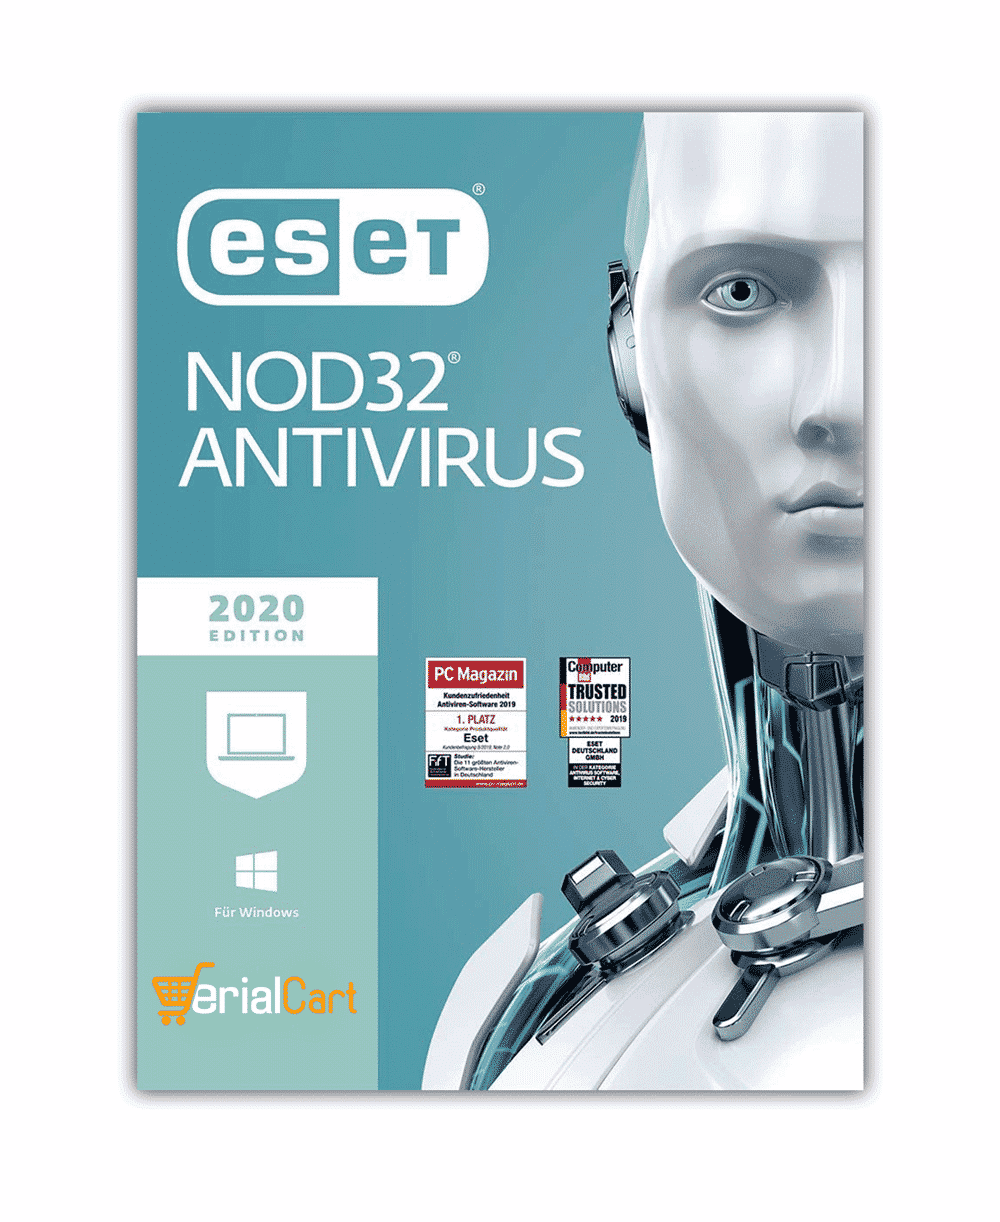 ESET Endpoint Antivirus 10.1.2046.0 instal